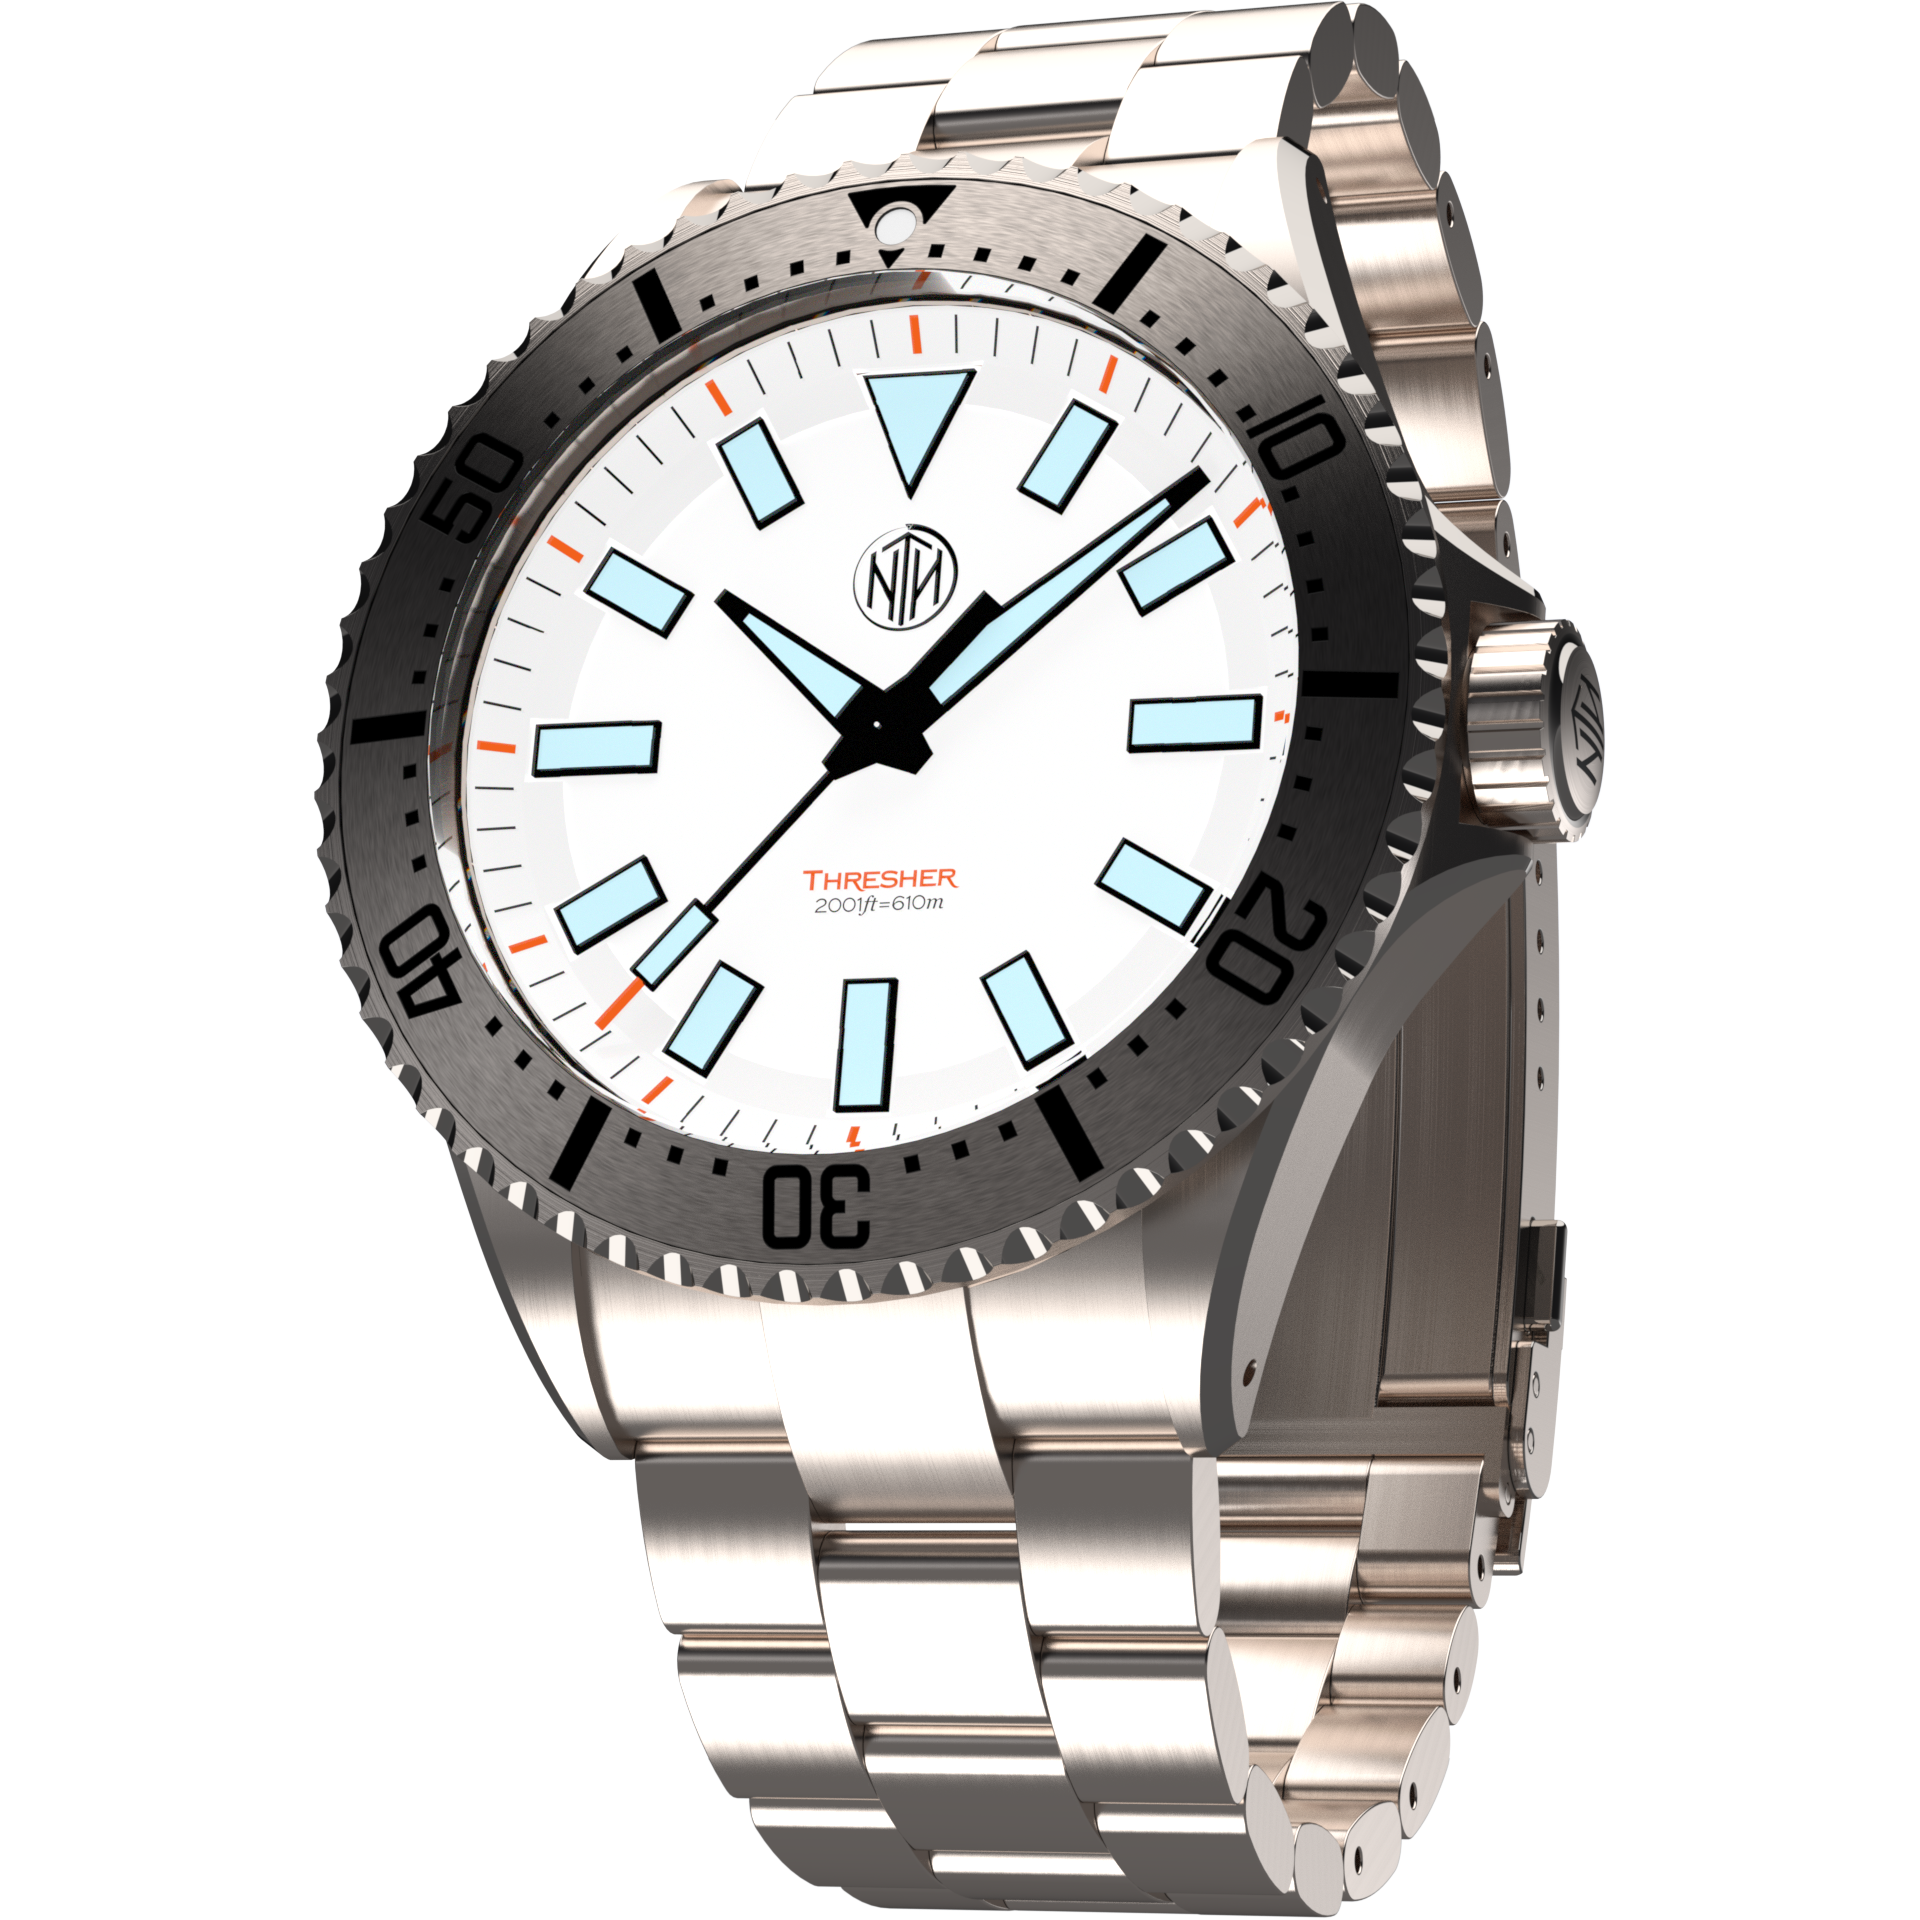 Thresher - Polar White - NTH Watches